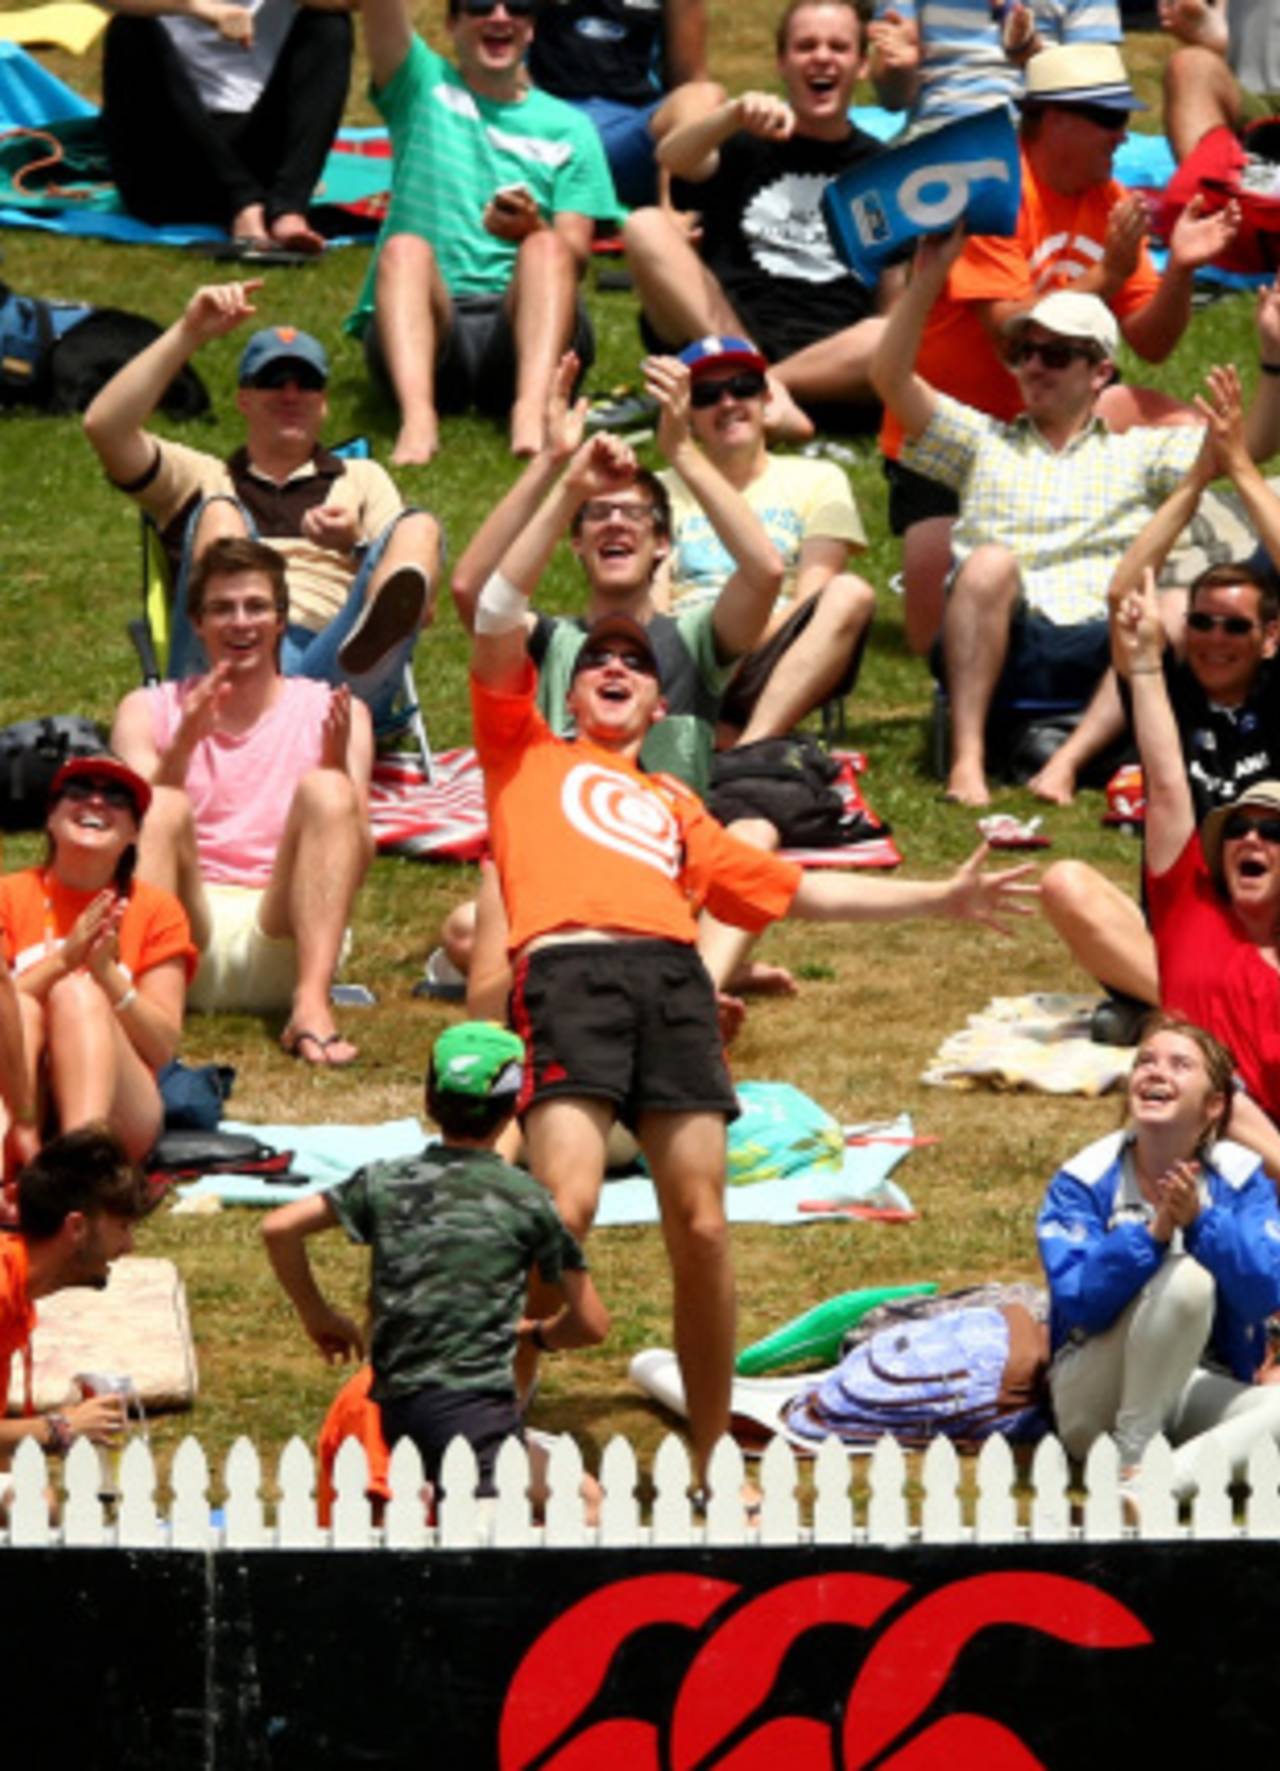 Michael Morton celebrates his NZ$100,000 catch, New Zealand v West Indies, 5th ODI, Hamilton, January 8, 2013